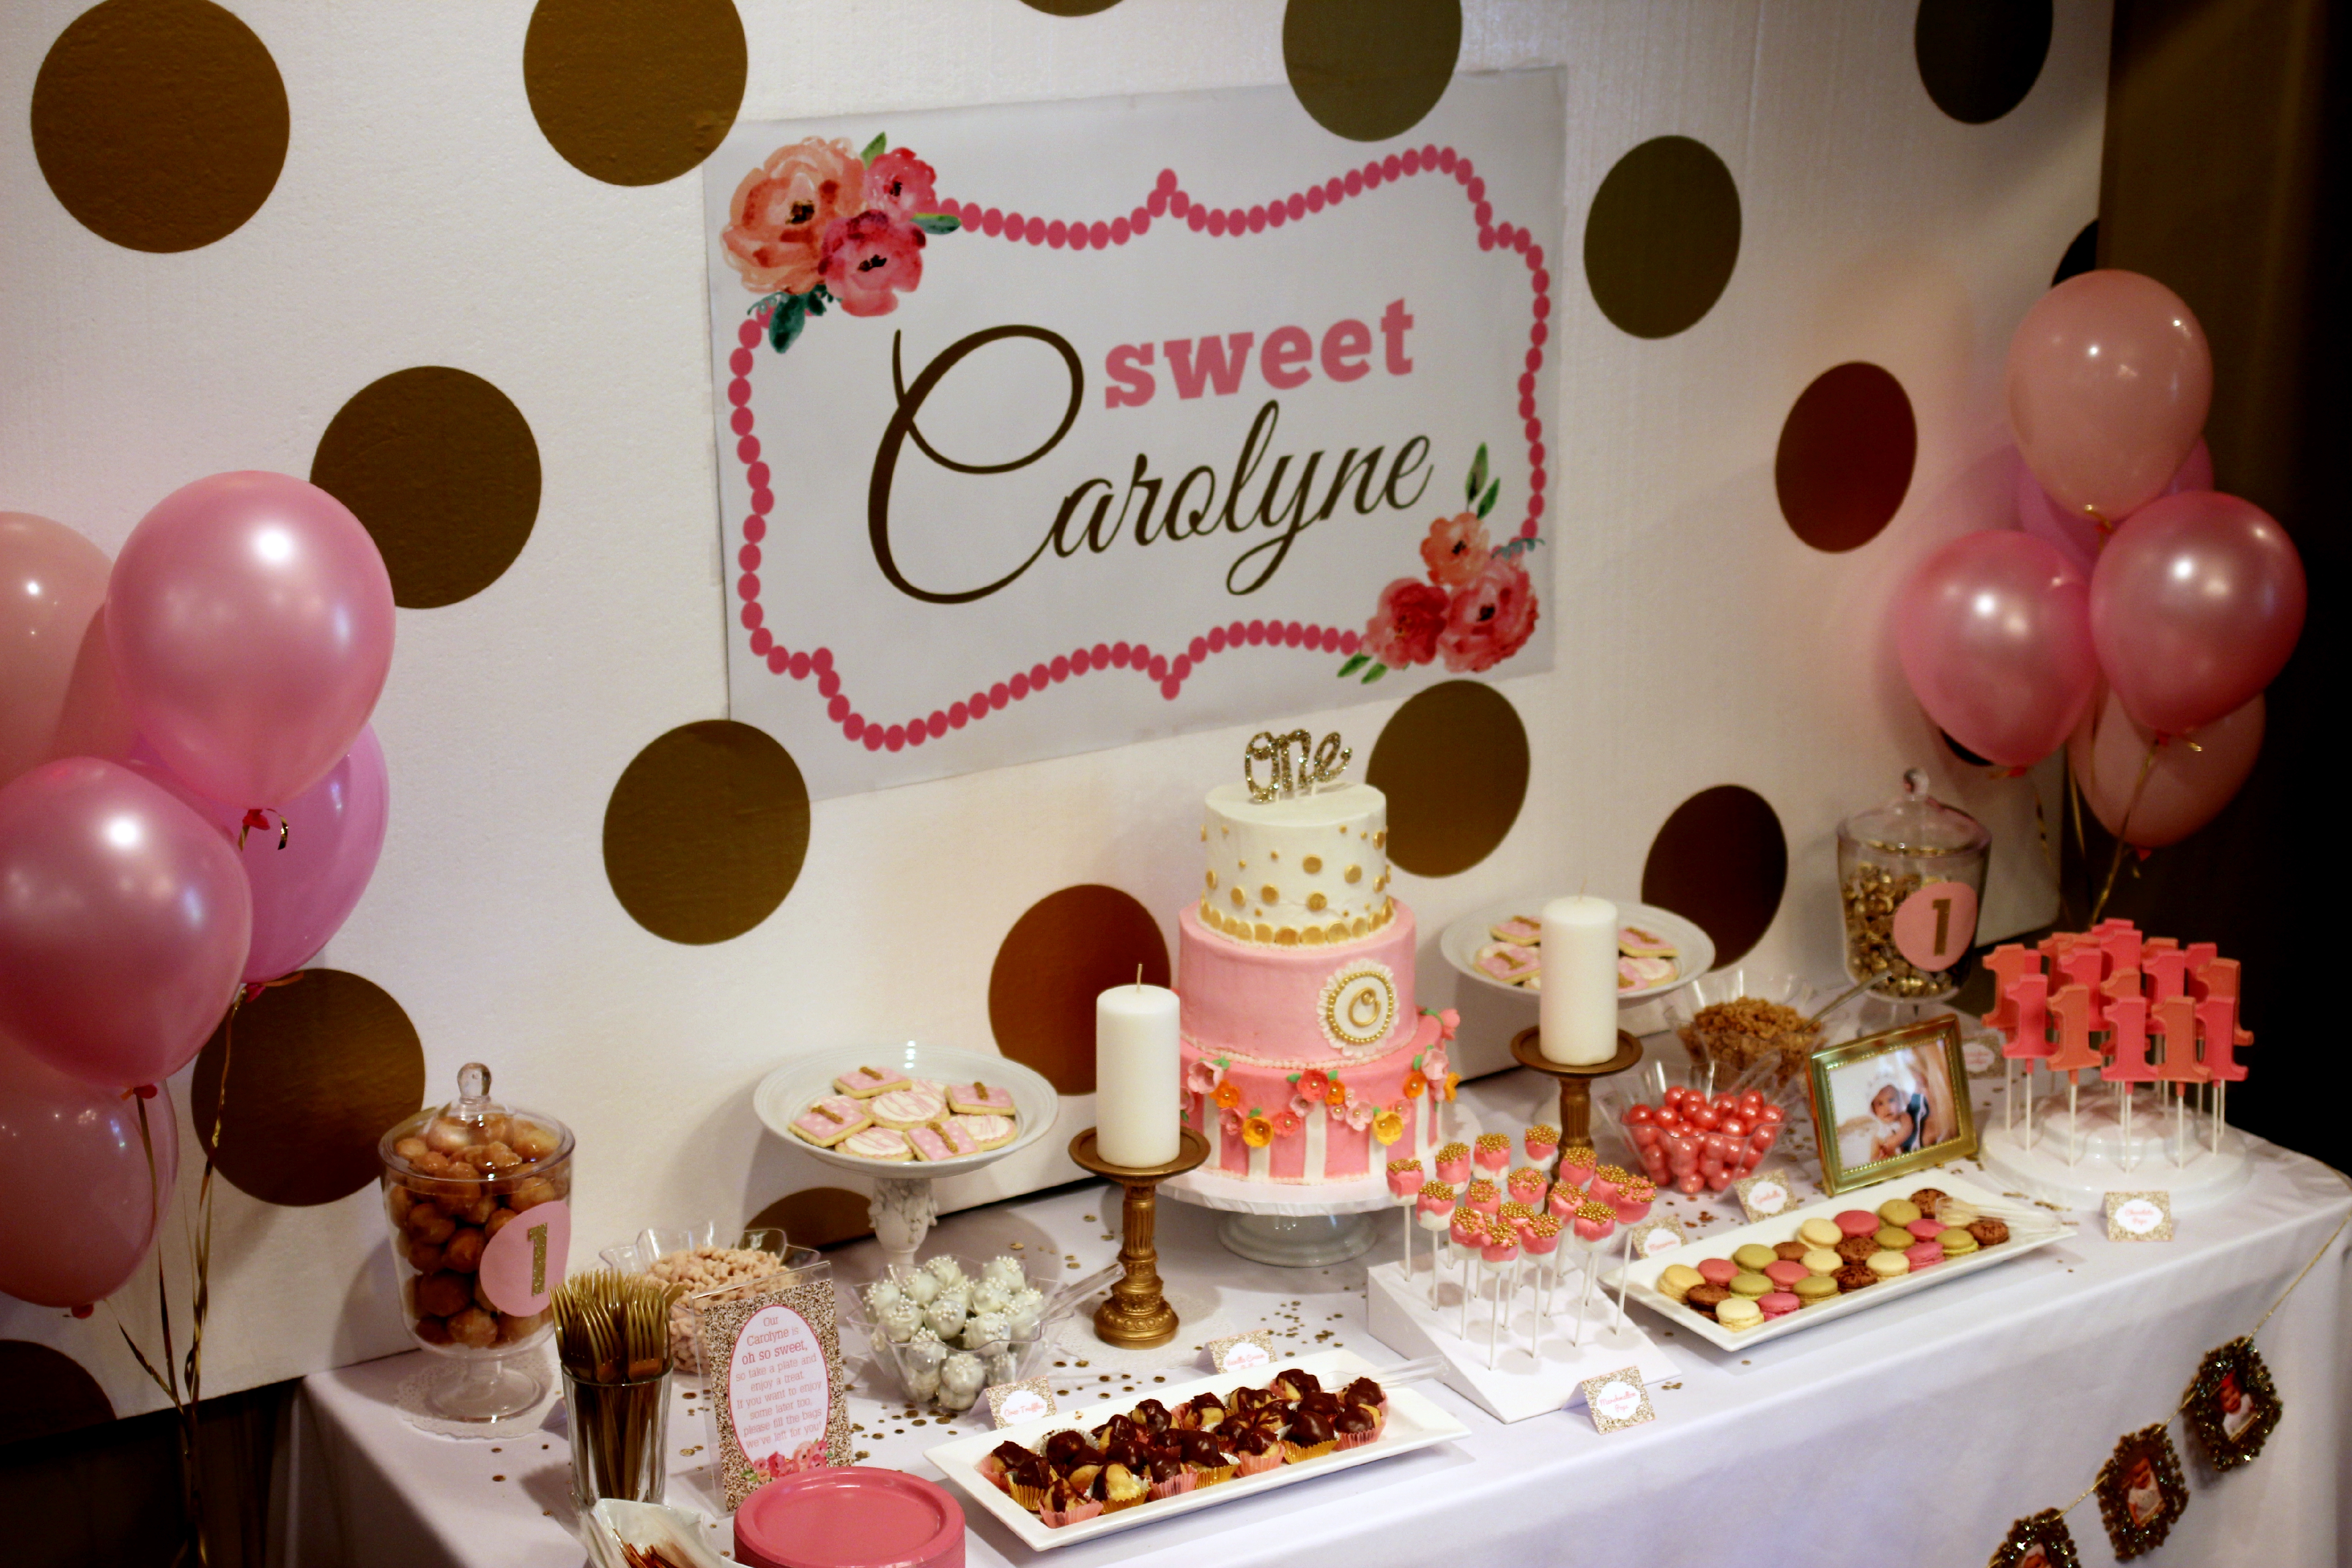 Sweet Carolyne 1st Birthday Party Dessert Table